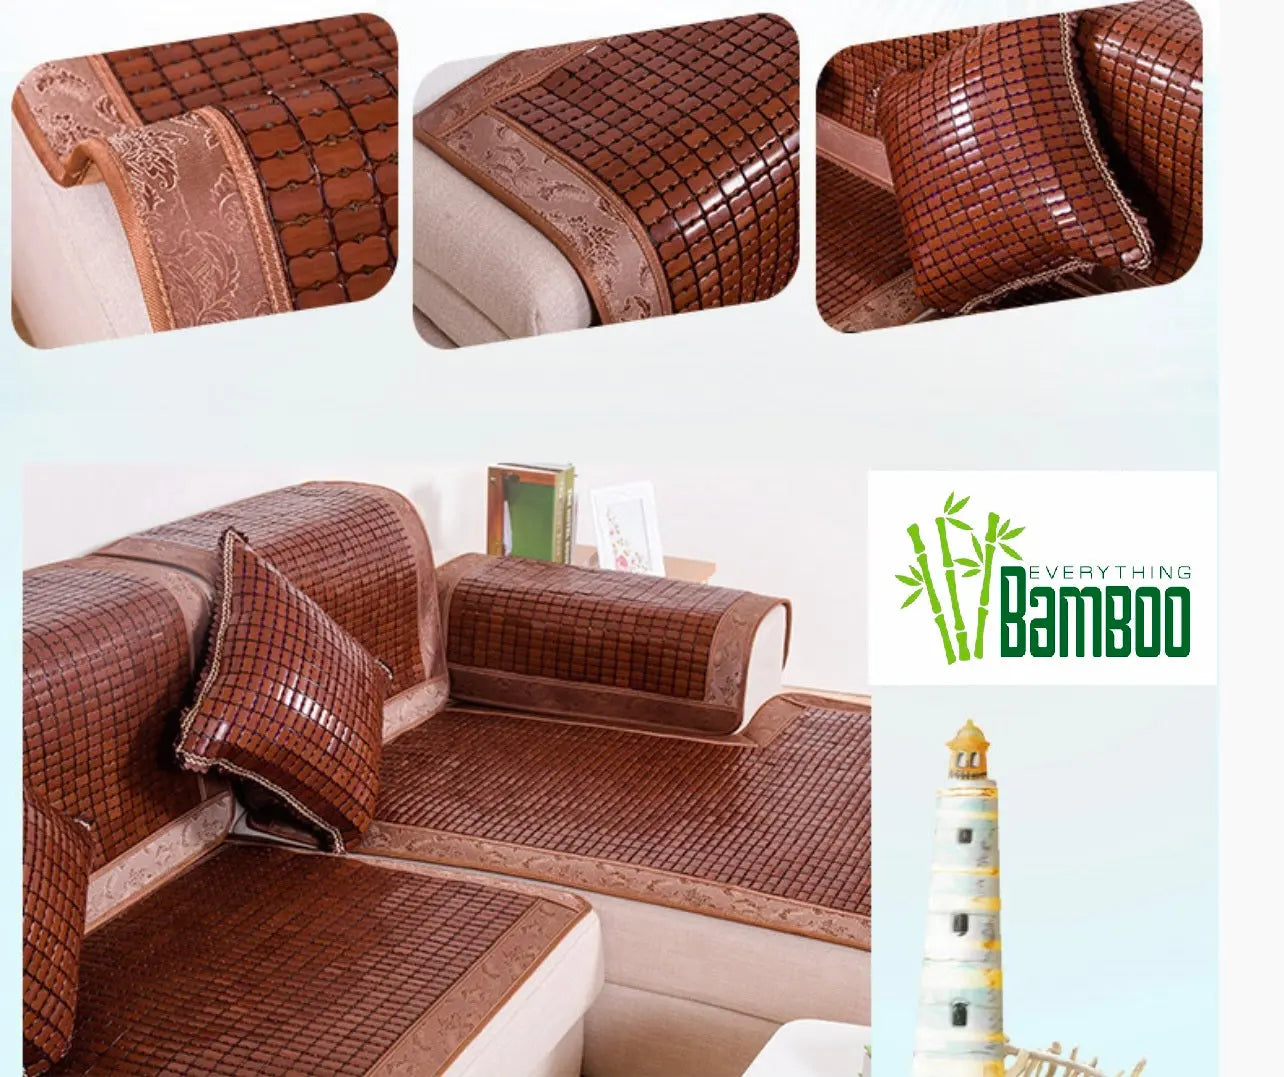 Bamboo Mat Cool Summer Mat Seat Cover Cushion Sofa Car Yoga Floor Rug BSC04 everythingbamboo